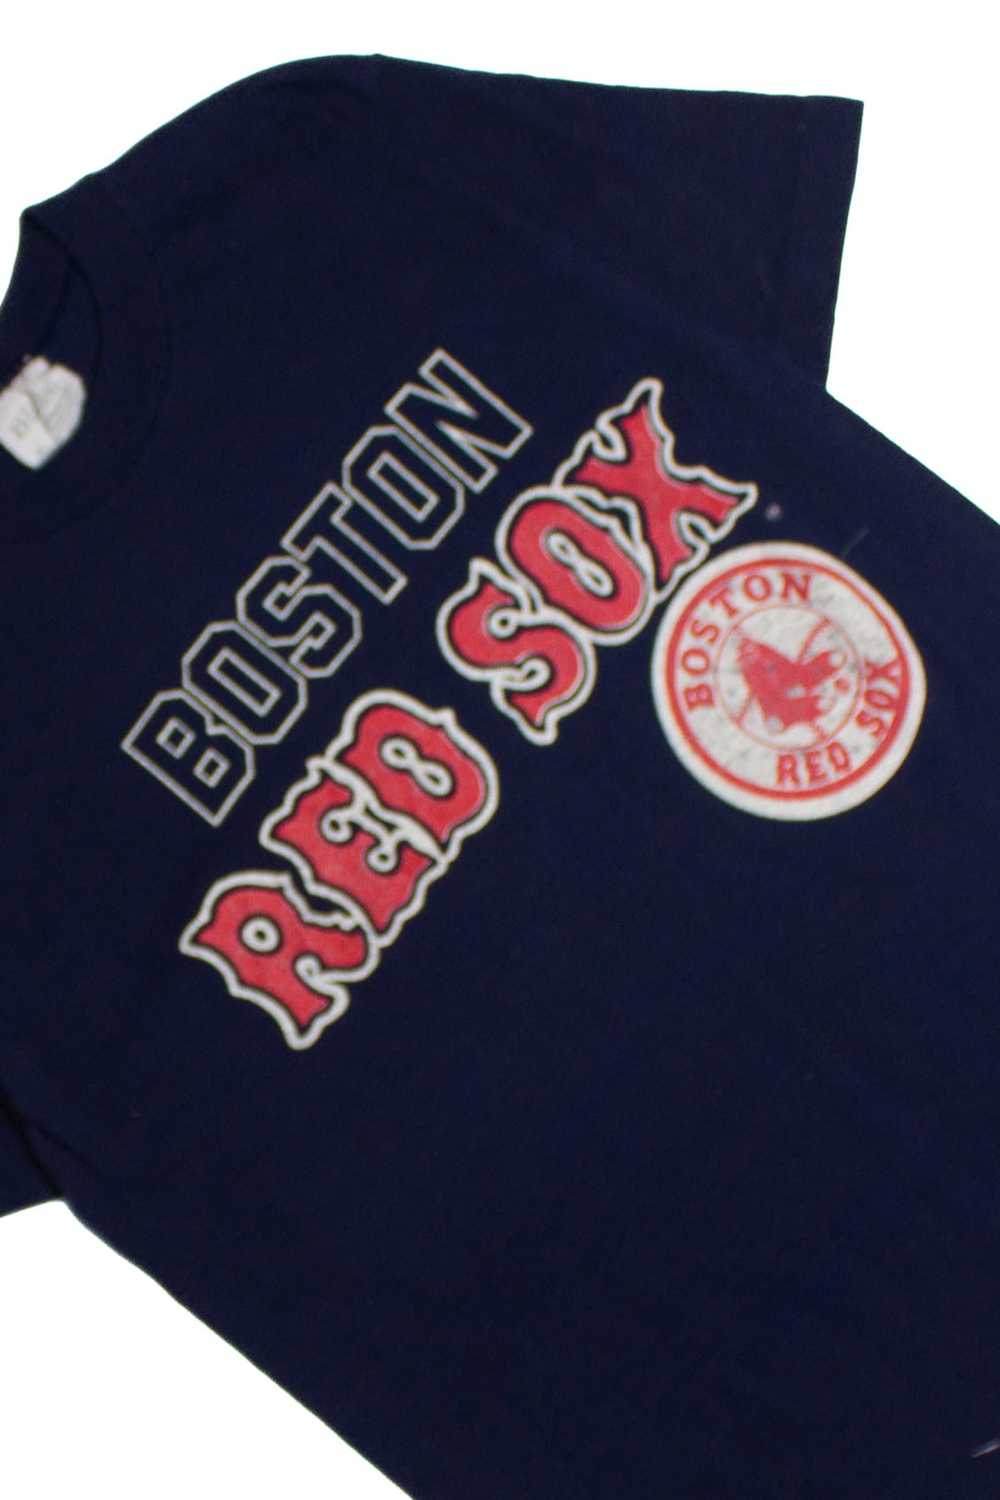 Vintage Blaze Boston Red Sox T-Shirt (1980s) 9471 - image 2